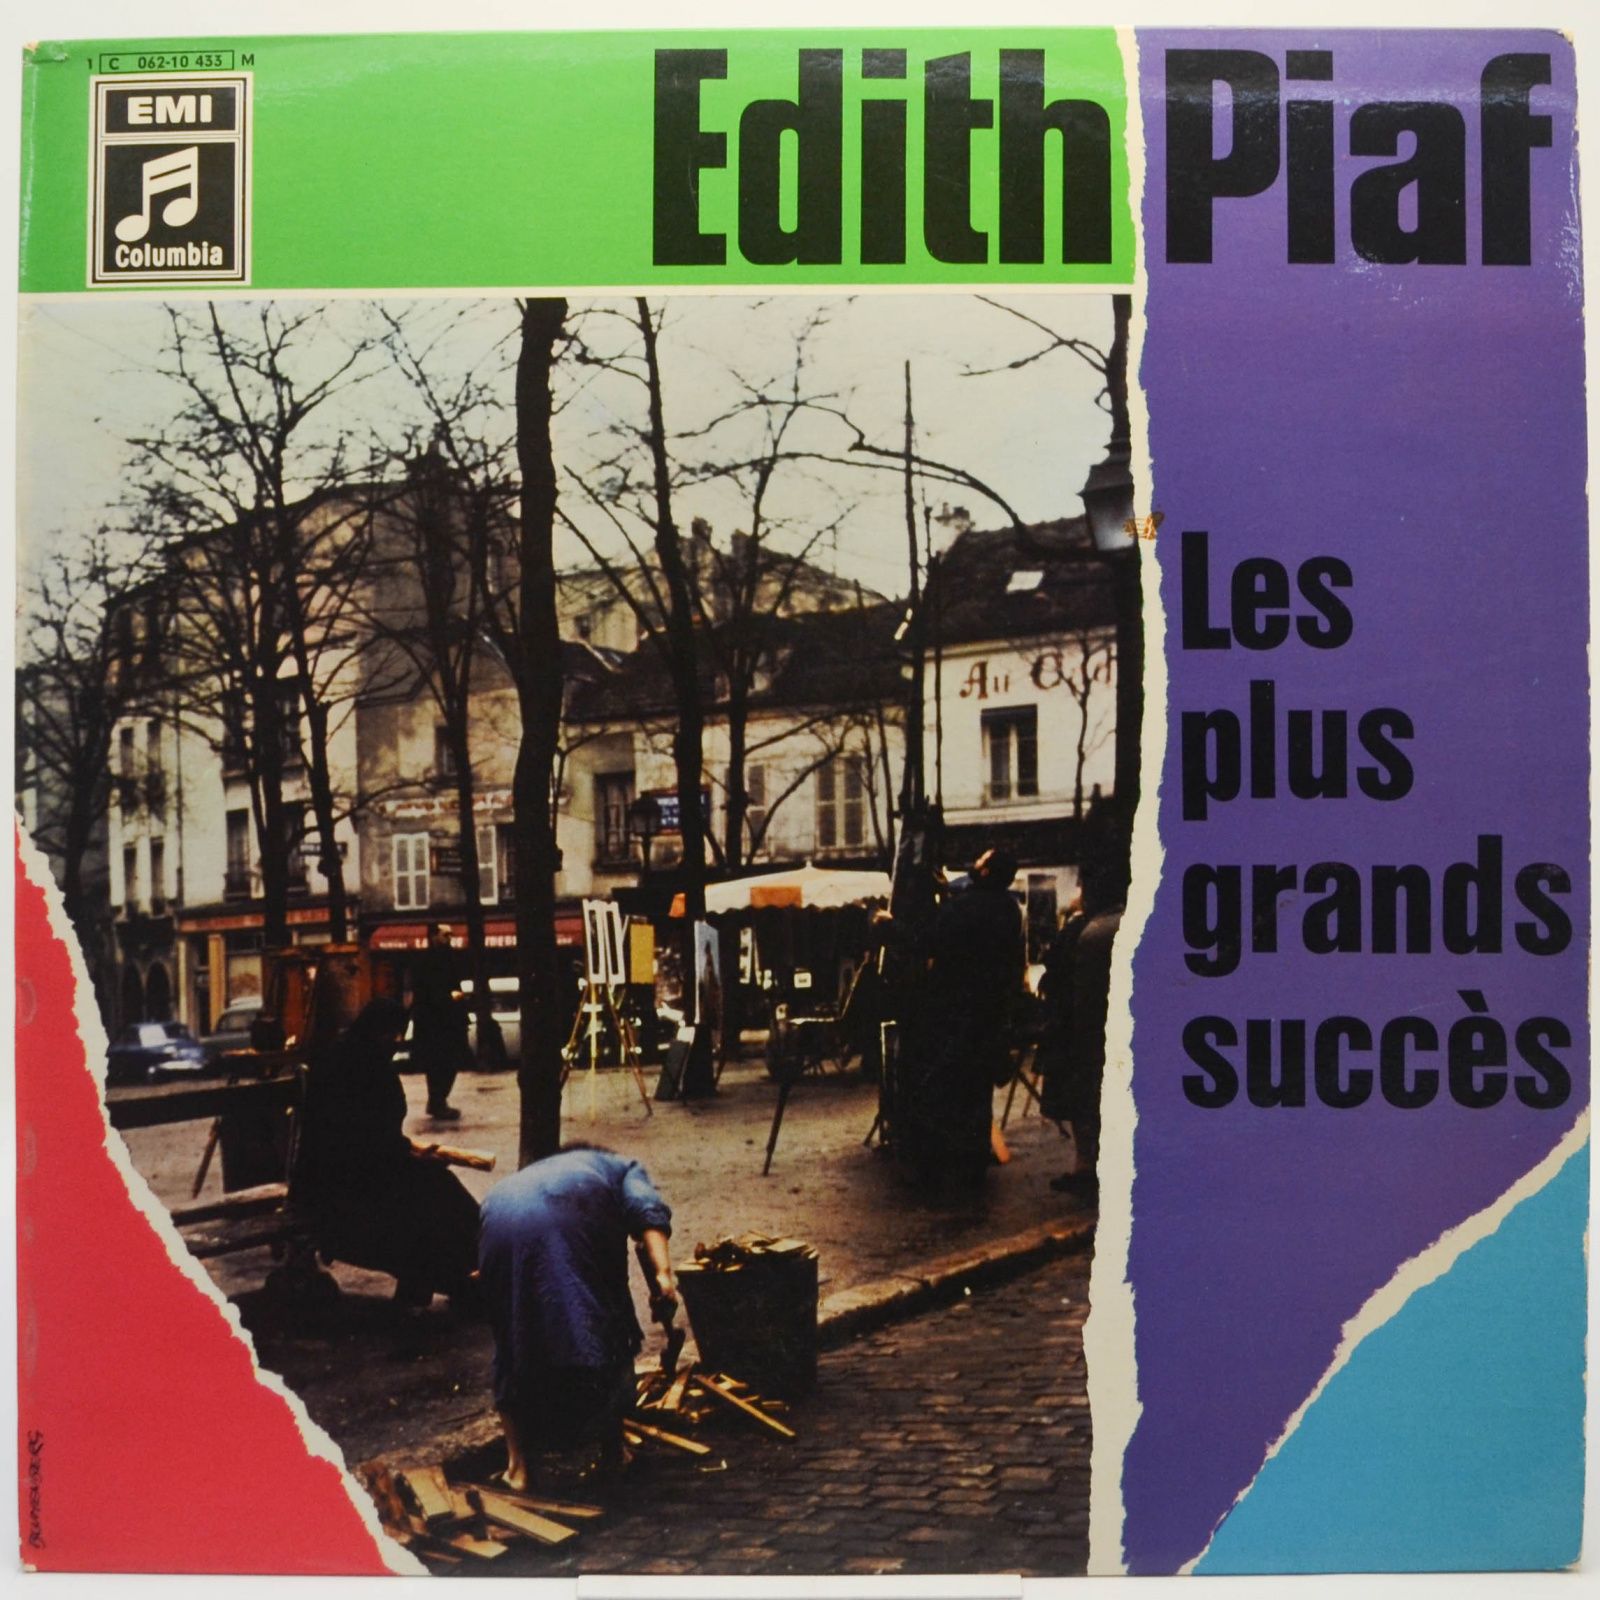 Edith Piaf — Les Plus Grands Succès, 1975